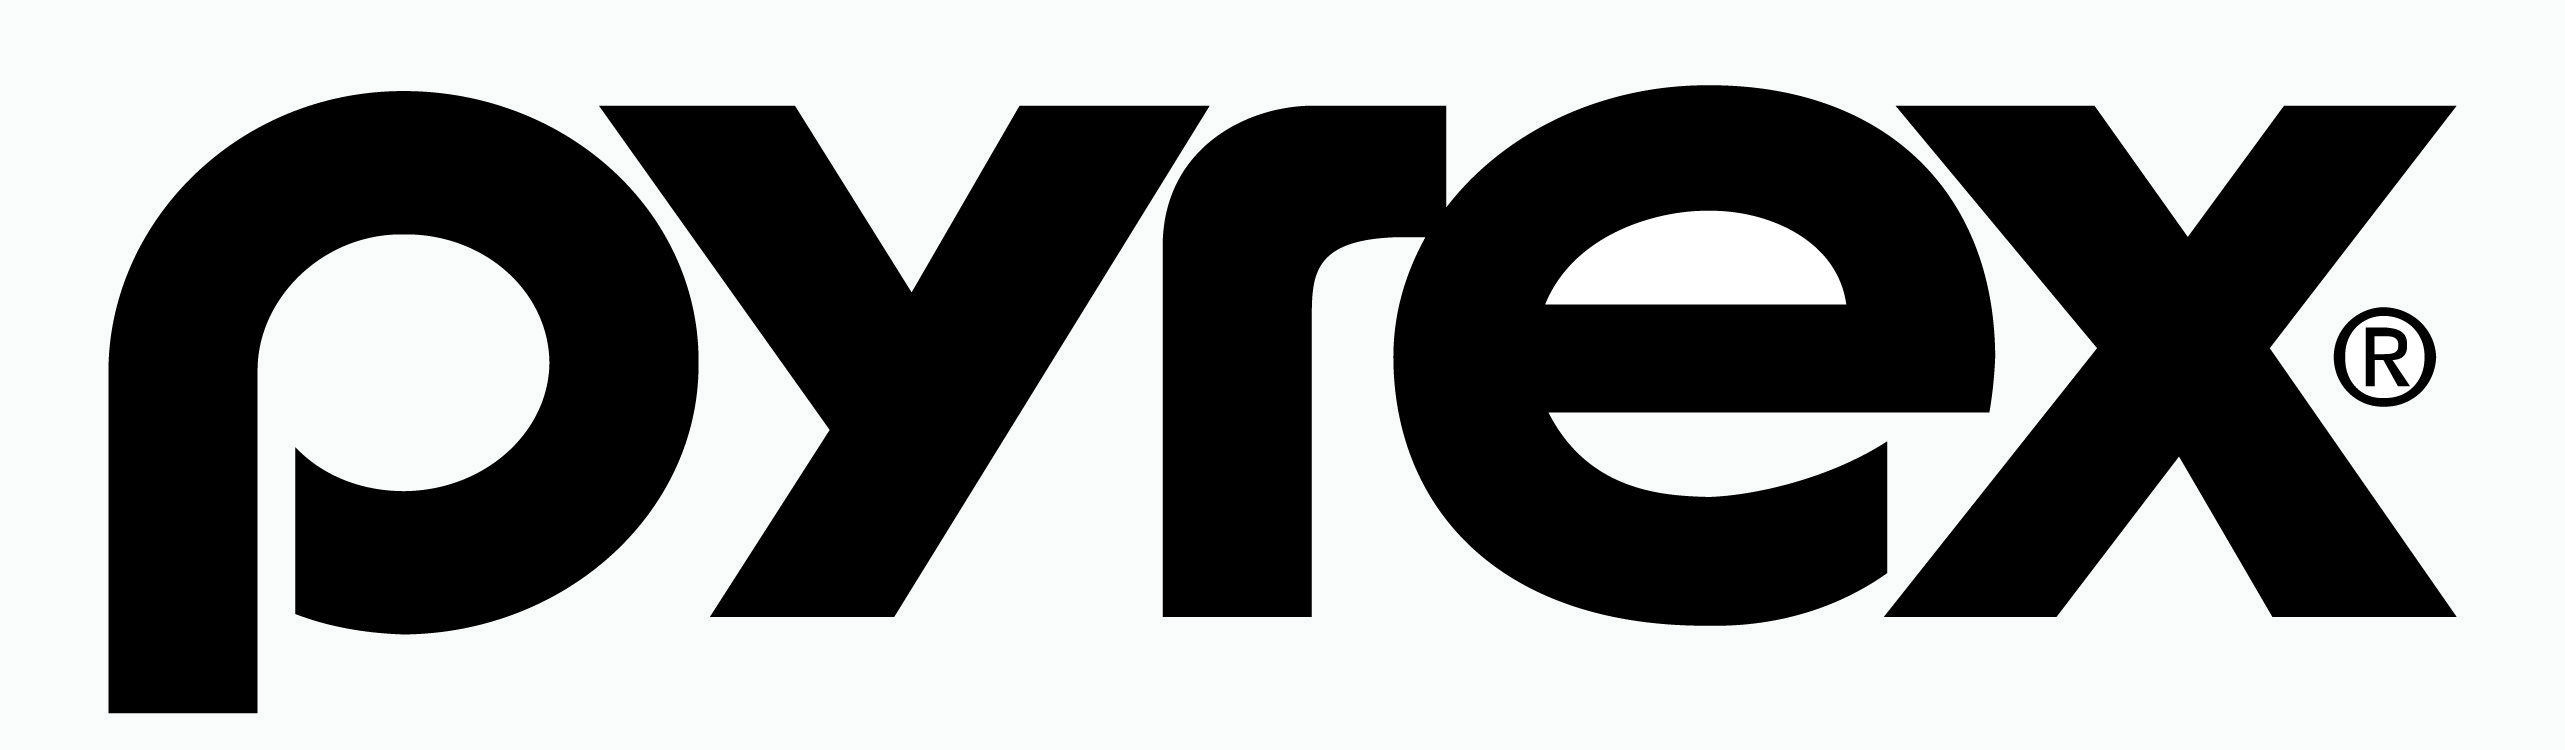 Pyrex Logo - Pyrex Logos